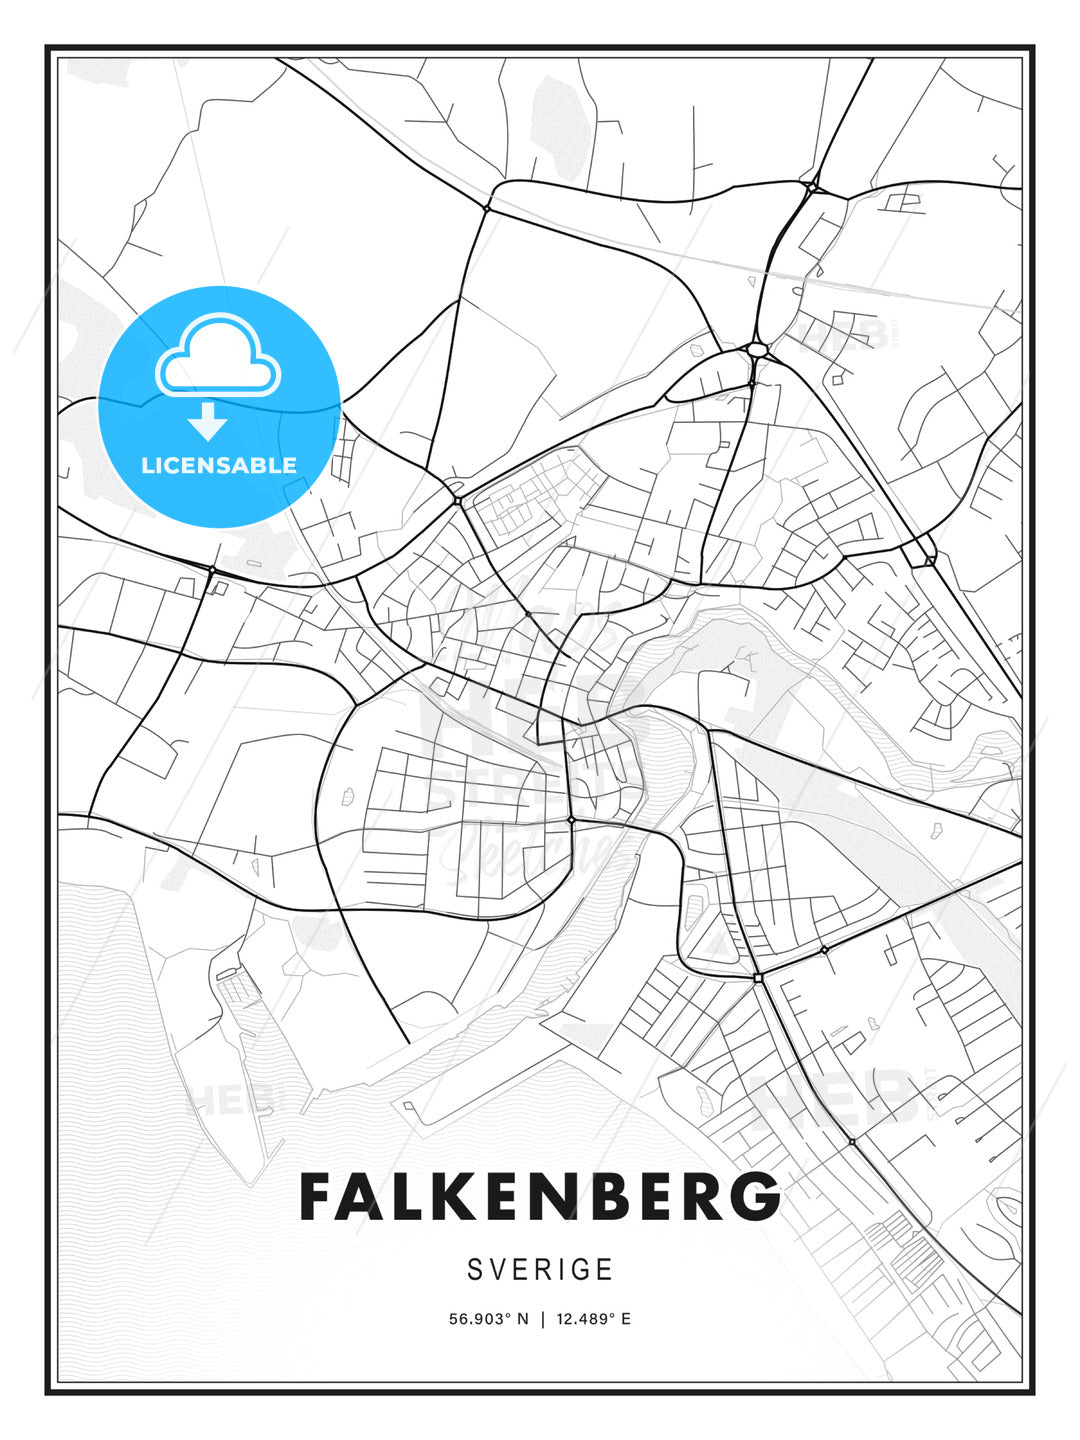 Falkenberg, Sweden, Modern Print Template in Various Formats - HEBSTREITS Sketches